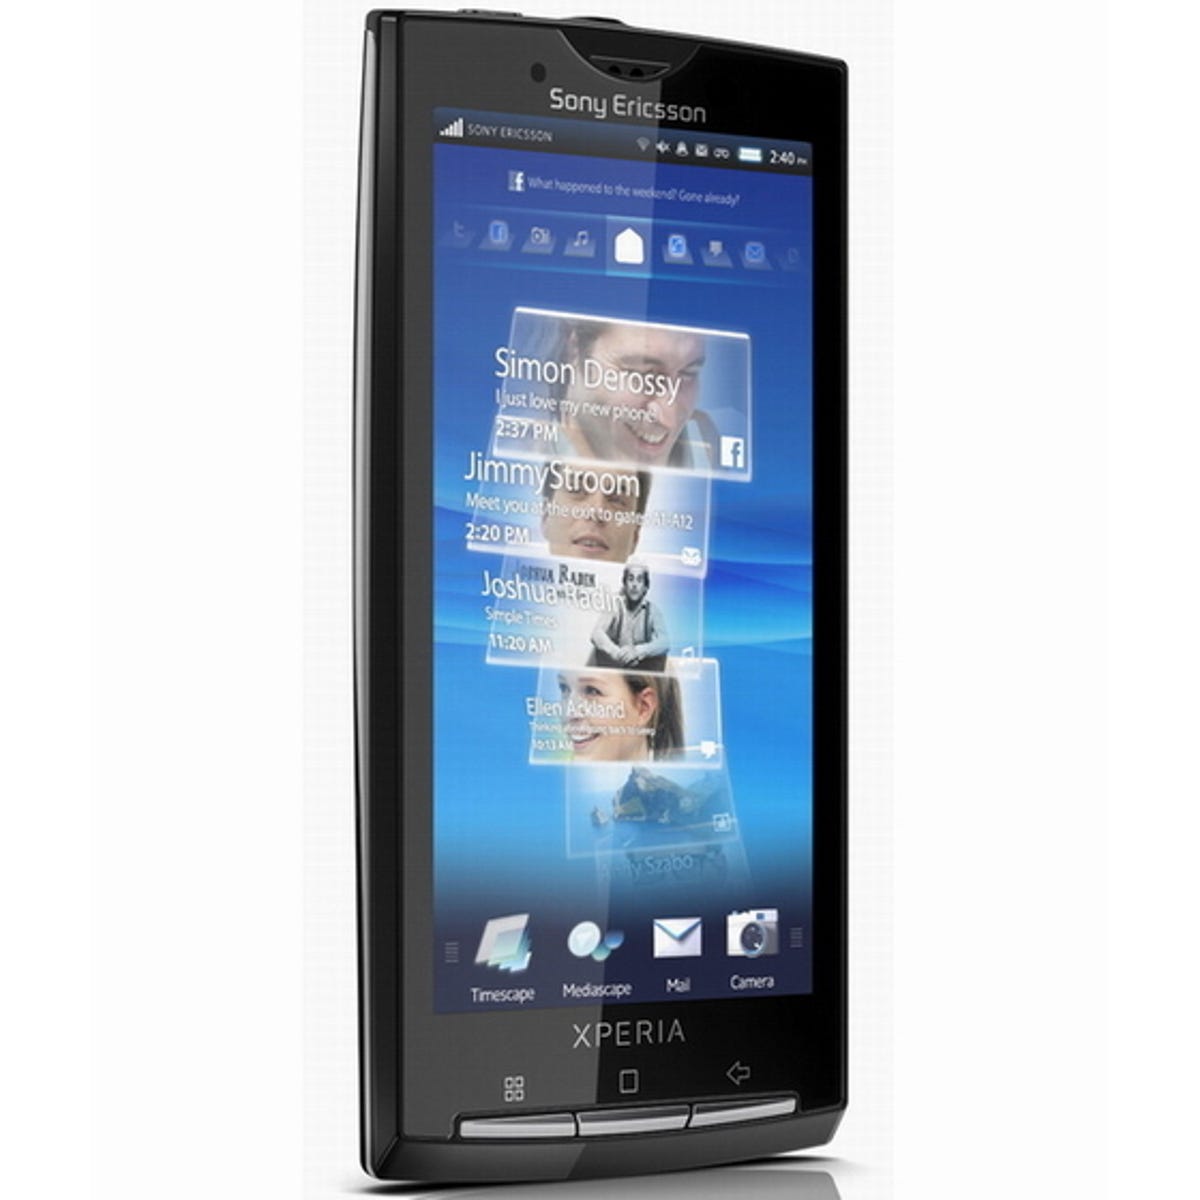 Sony-Ericsson-Xperia-X10-Android.jpg